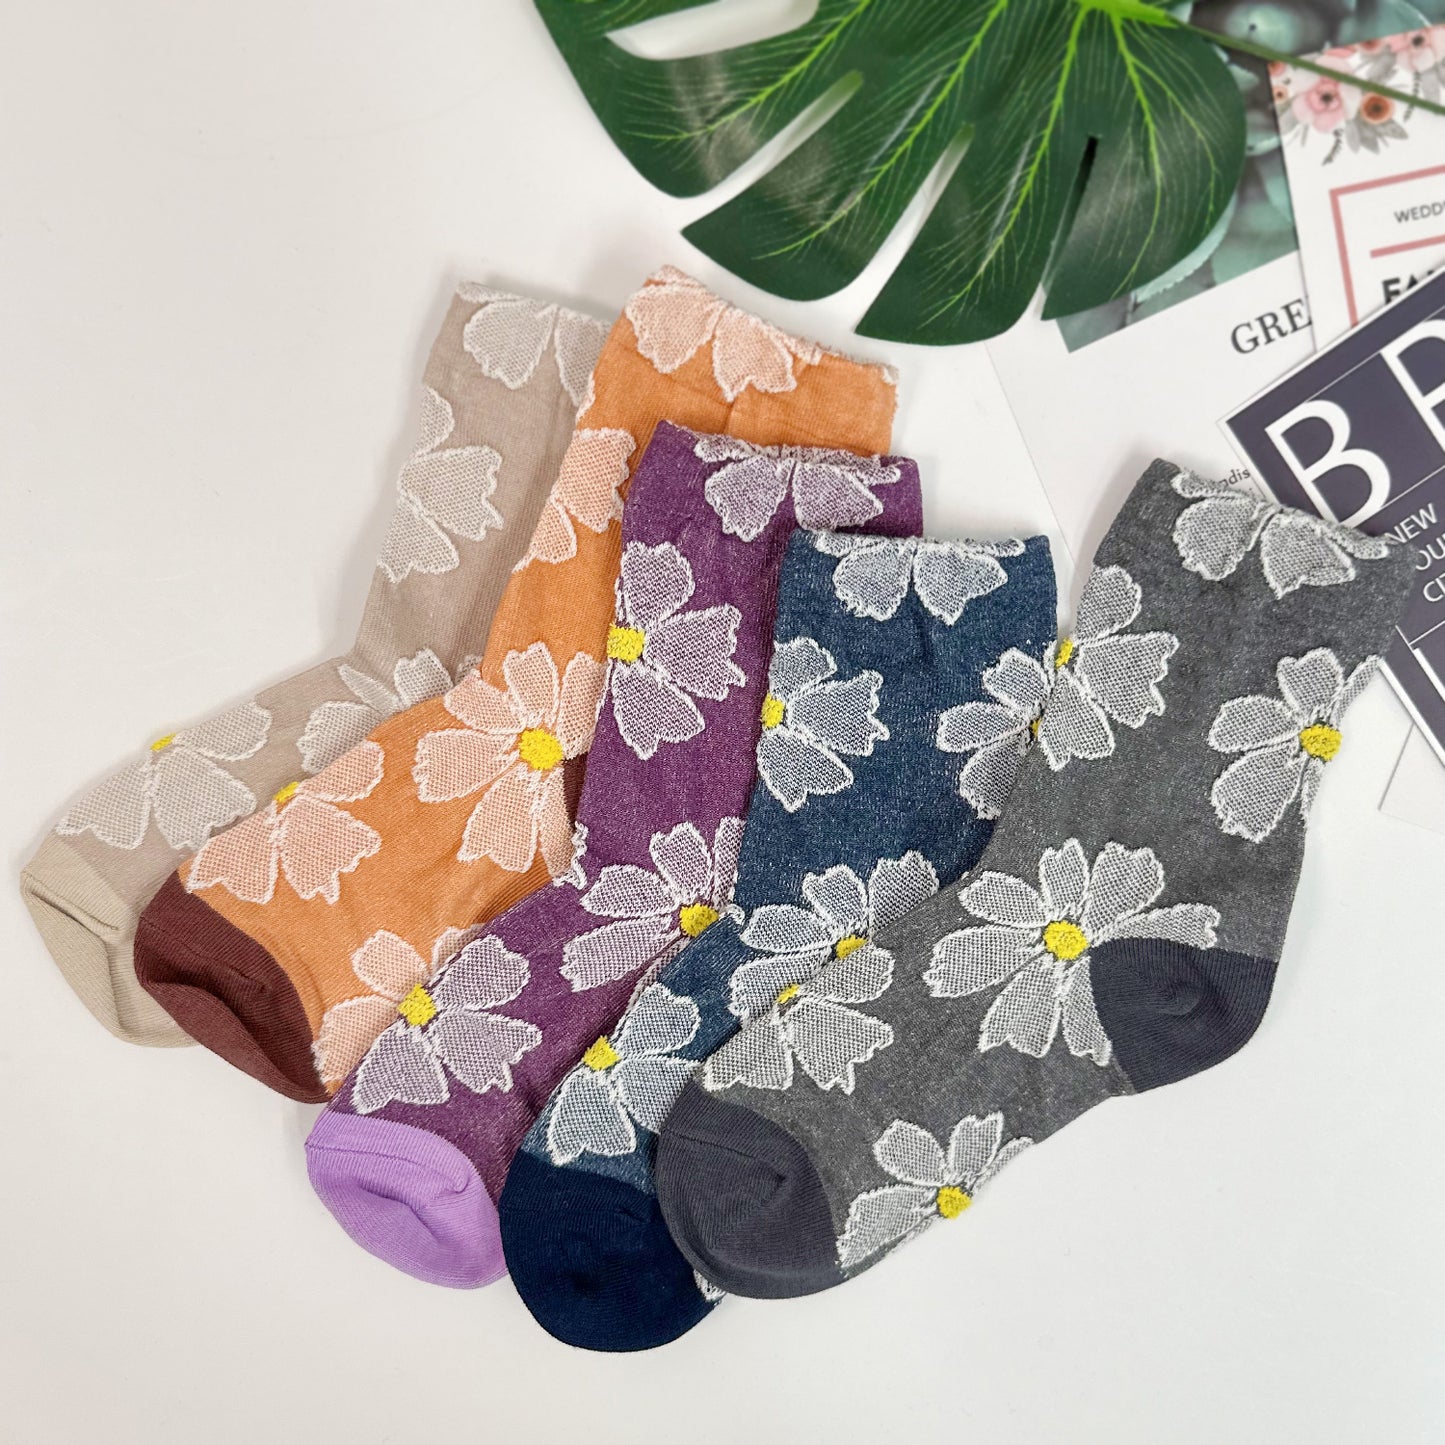 Women's Crew Daisy Embroidery Flower Socks